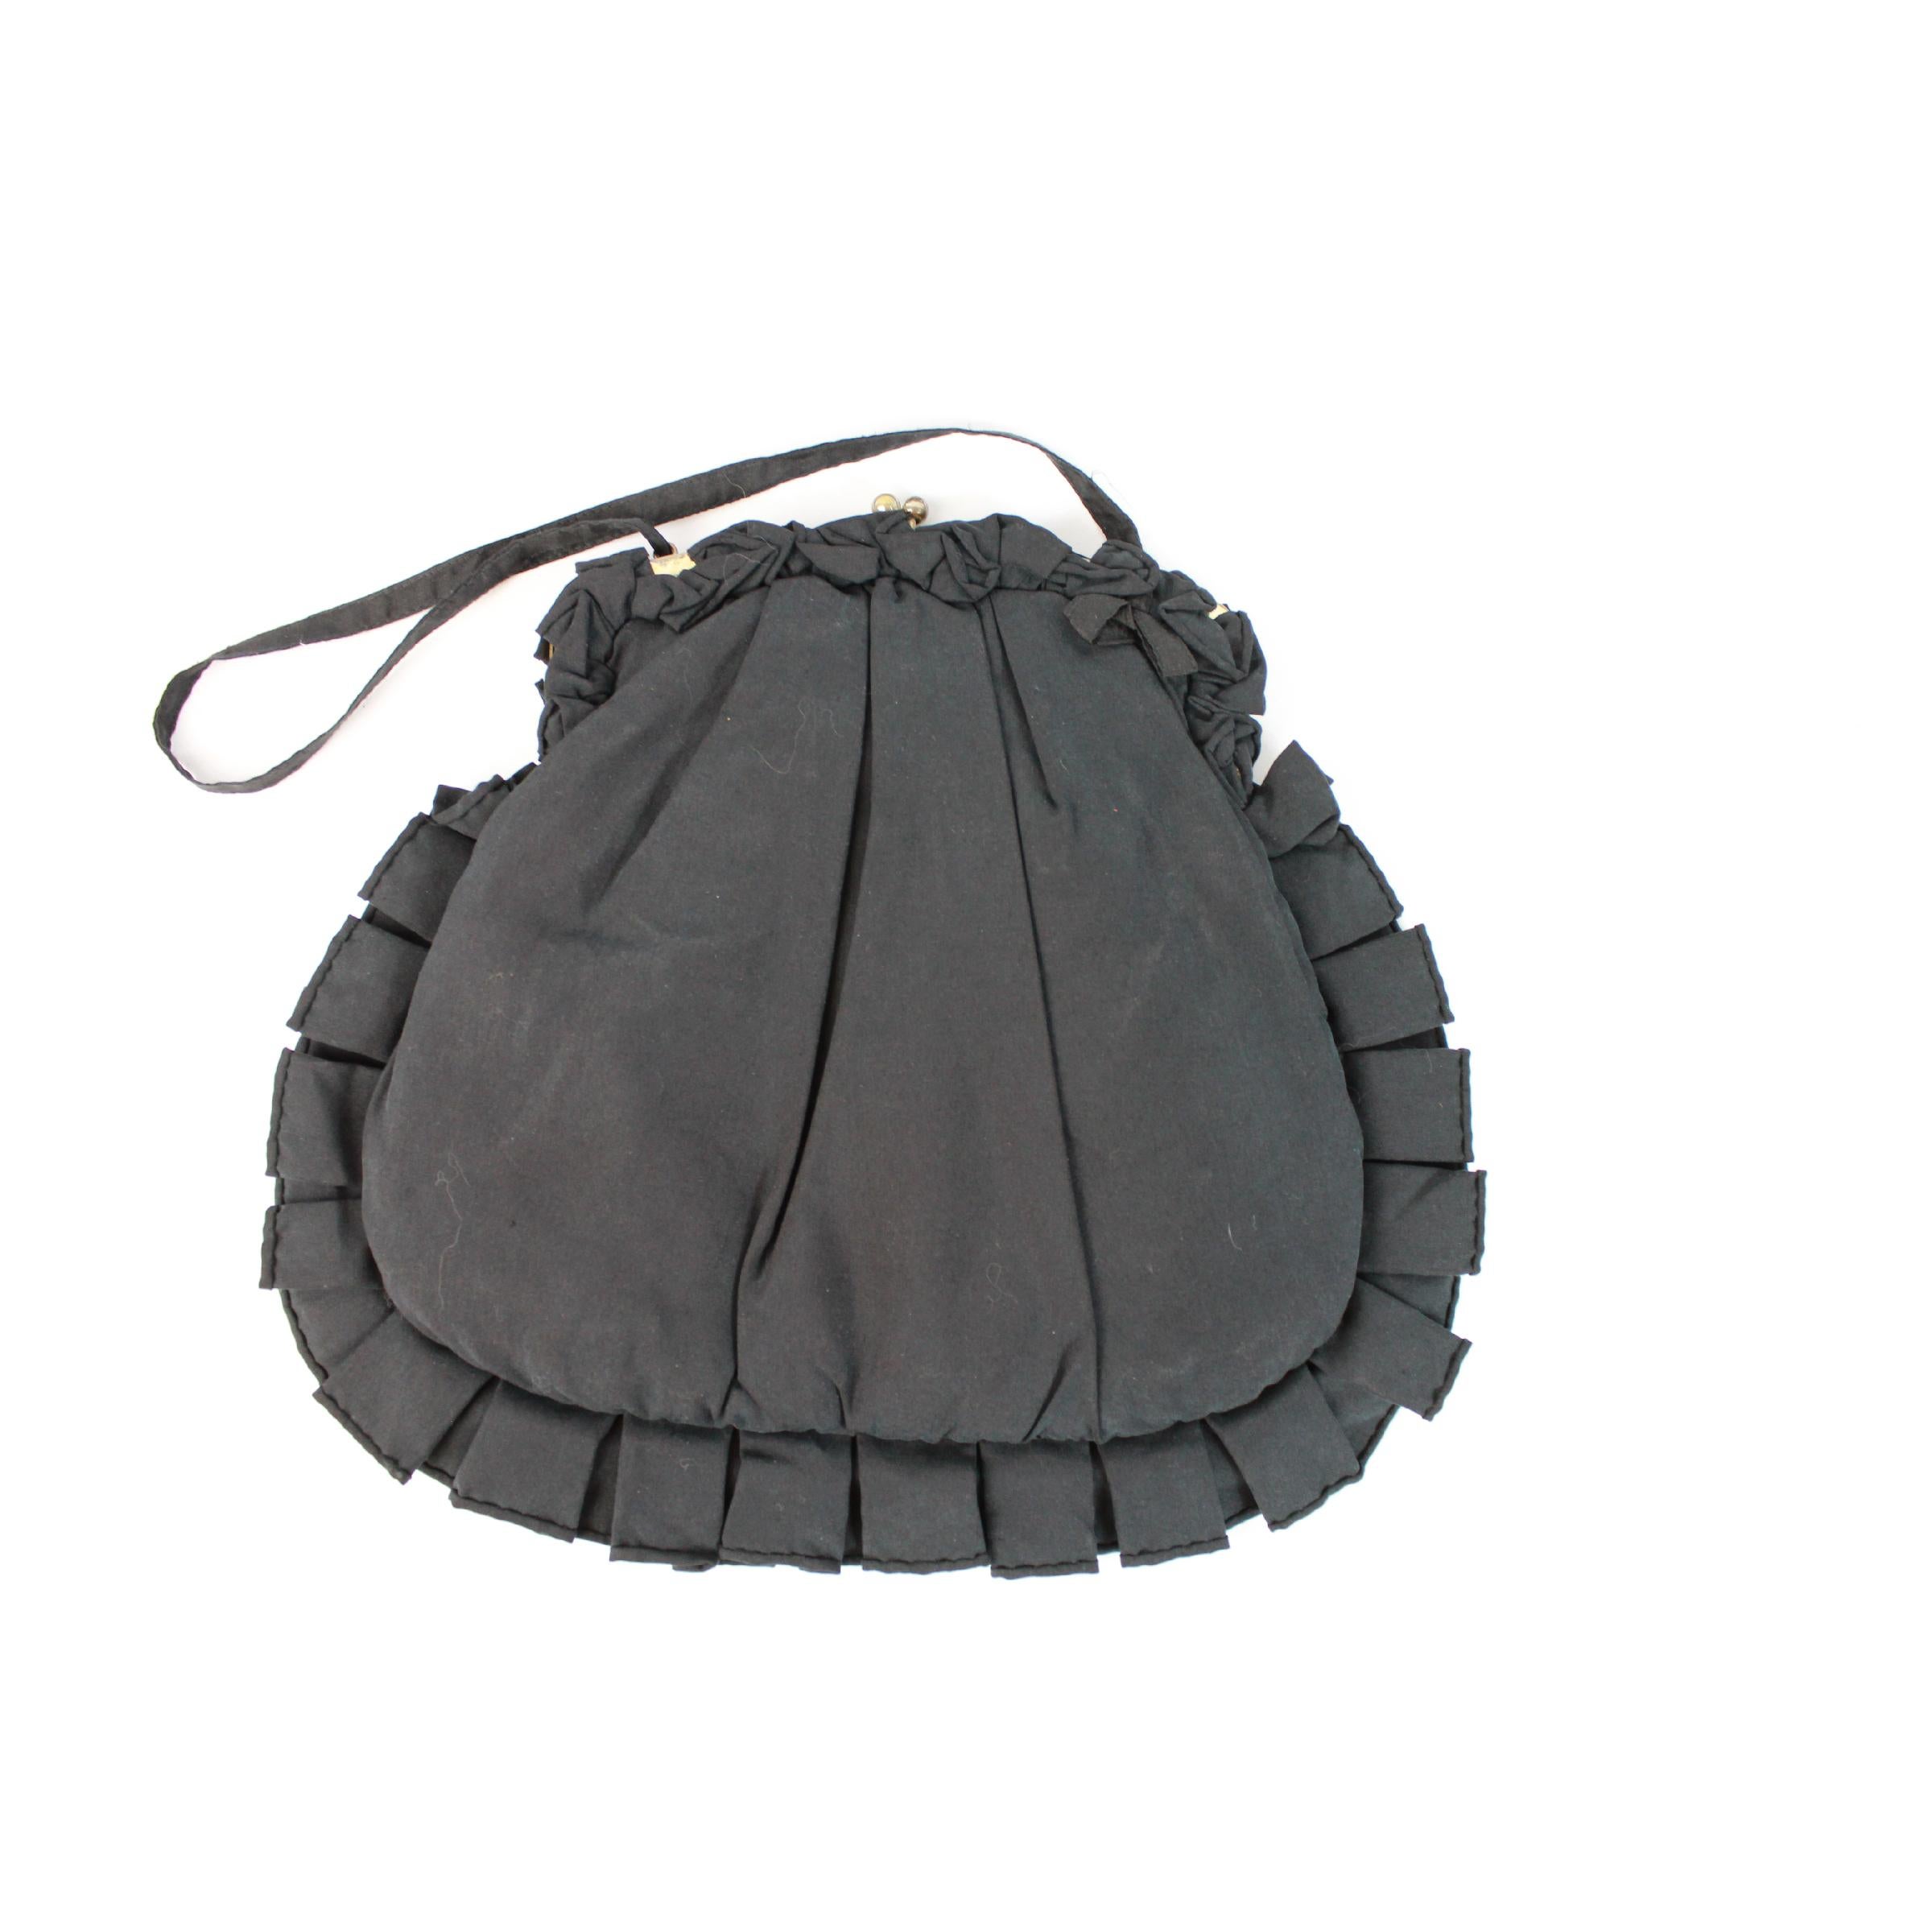 Vintage Jamin Puech handbag, black cotton, pleated, small shoulder strap, fan pattern, snap closure. 90s. Made in France. Excellent vintage condition.

Width: 25 cm
Height: 25 cm
Depth: 8 cm